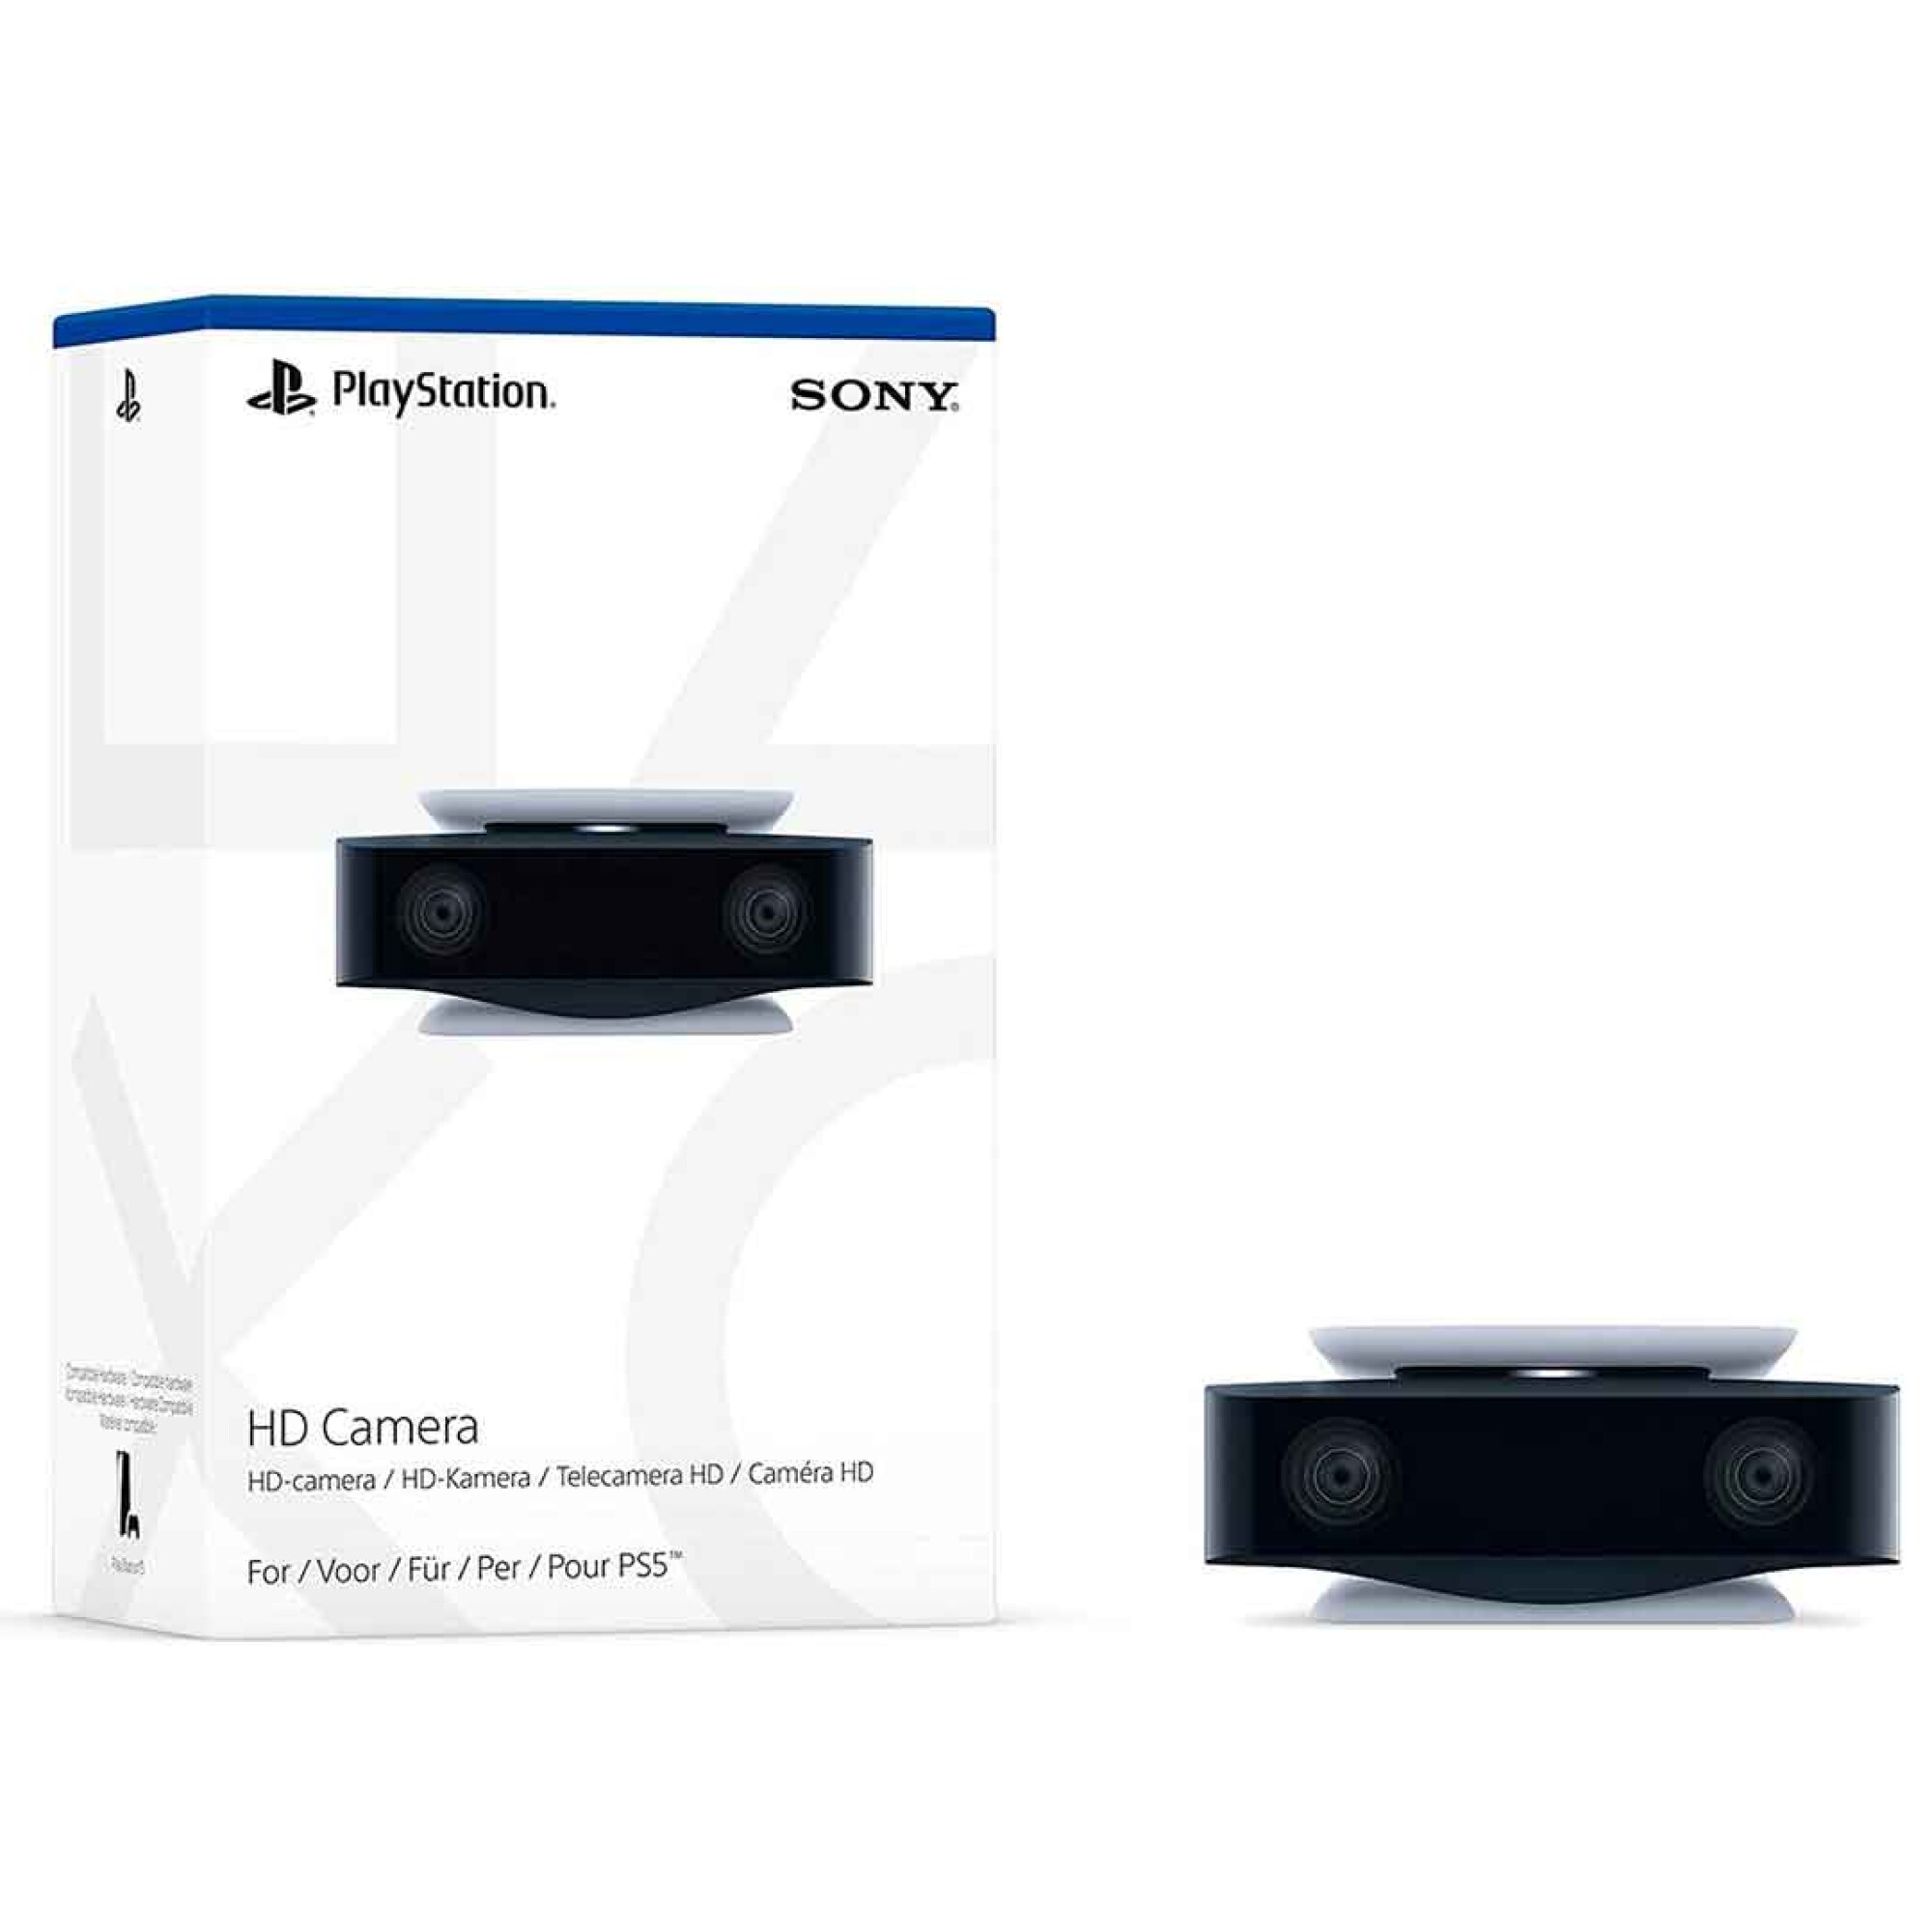 Cámara Playstation 5 Sony Full HD 1080p - 001 — Universo Binario